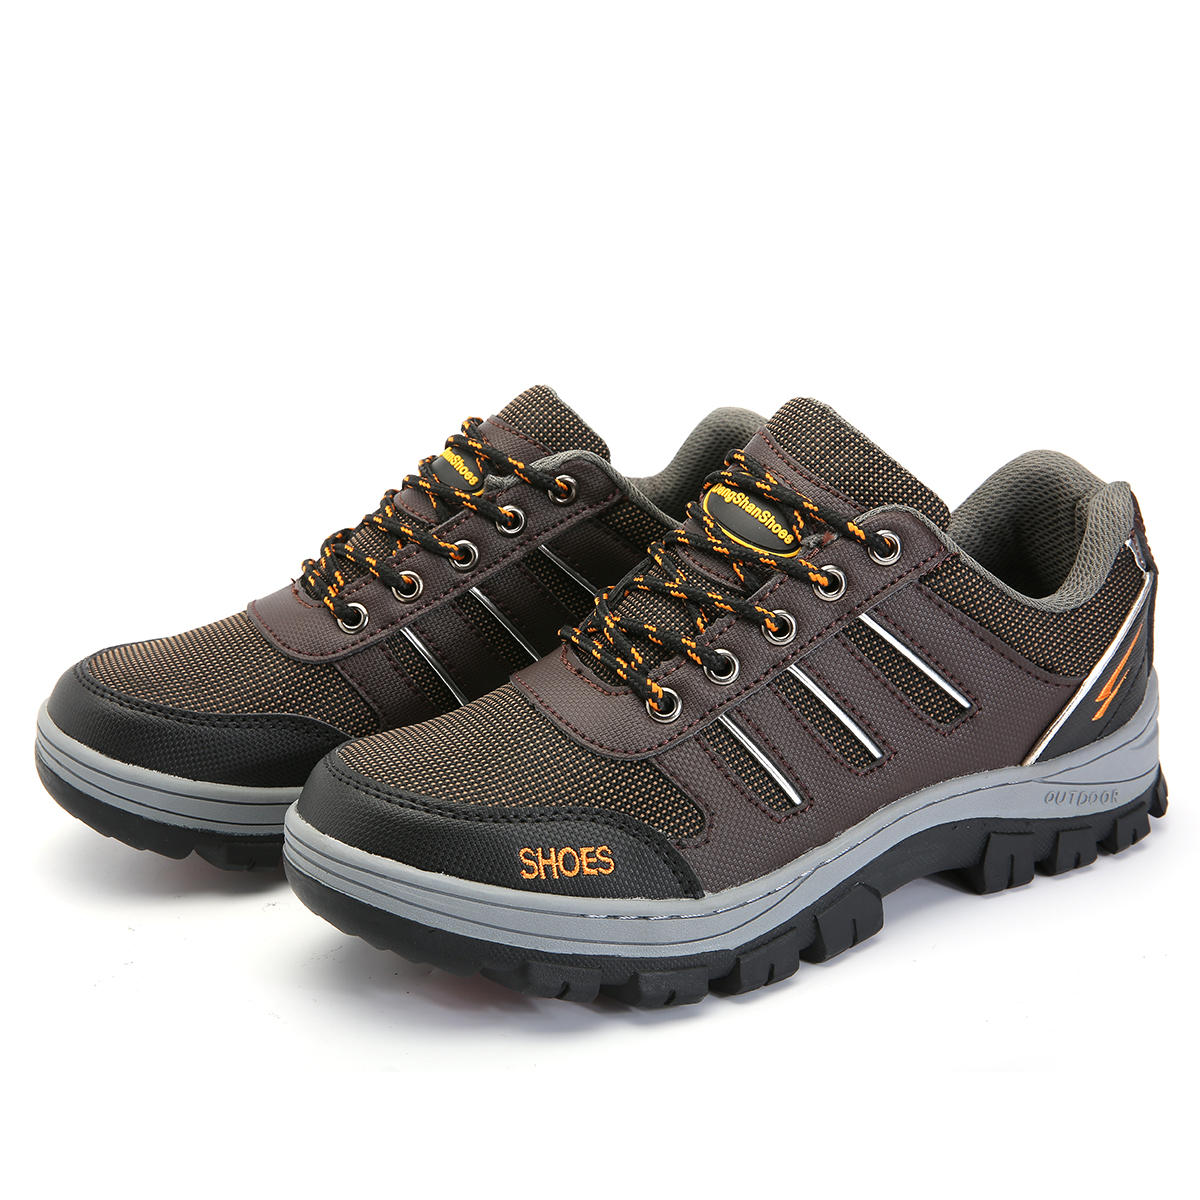 TENGOO Men's Safety Shoes Steel Toe Work Shoes Running Hiking Sneakers Non-Slip Waterproof